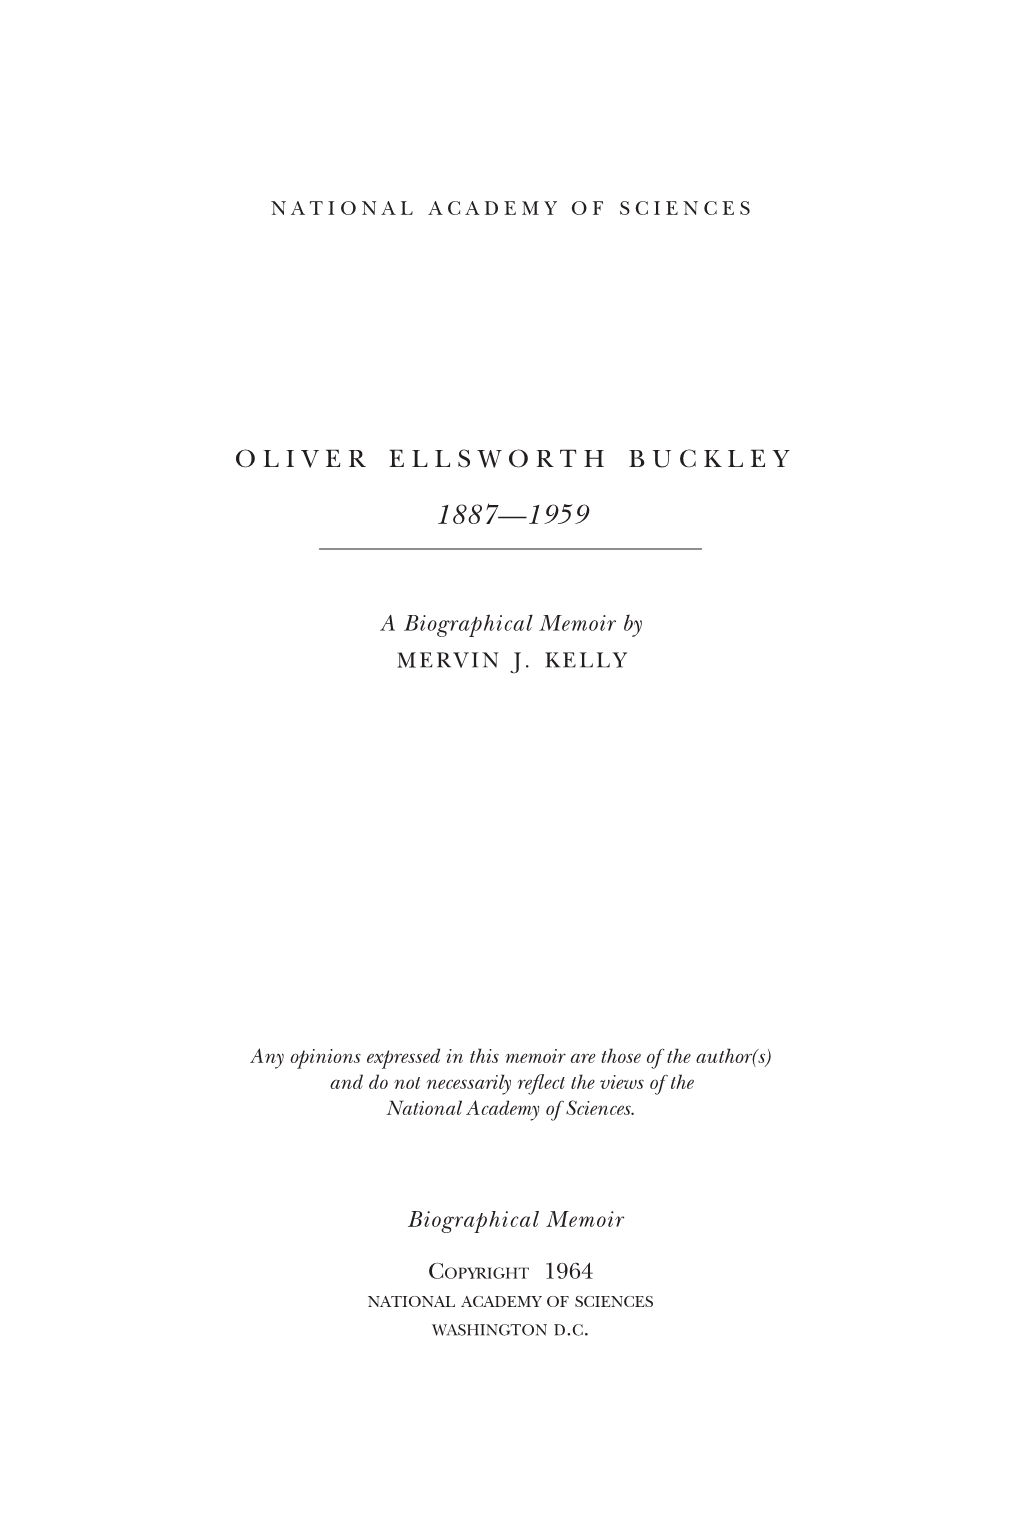 Oliver Ellsworth Buckley